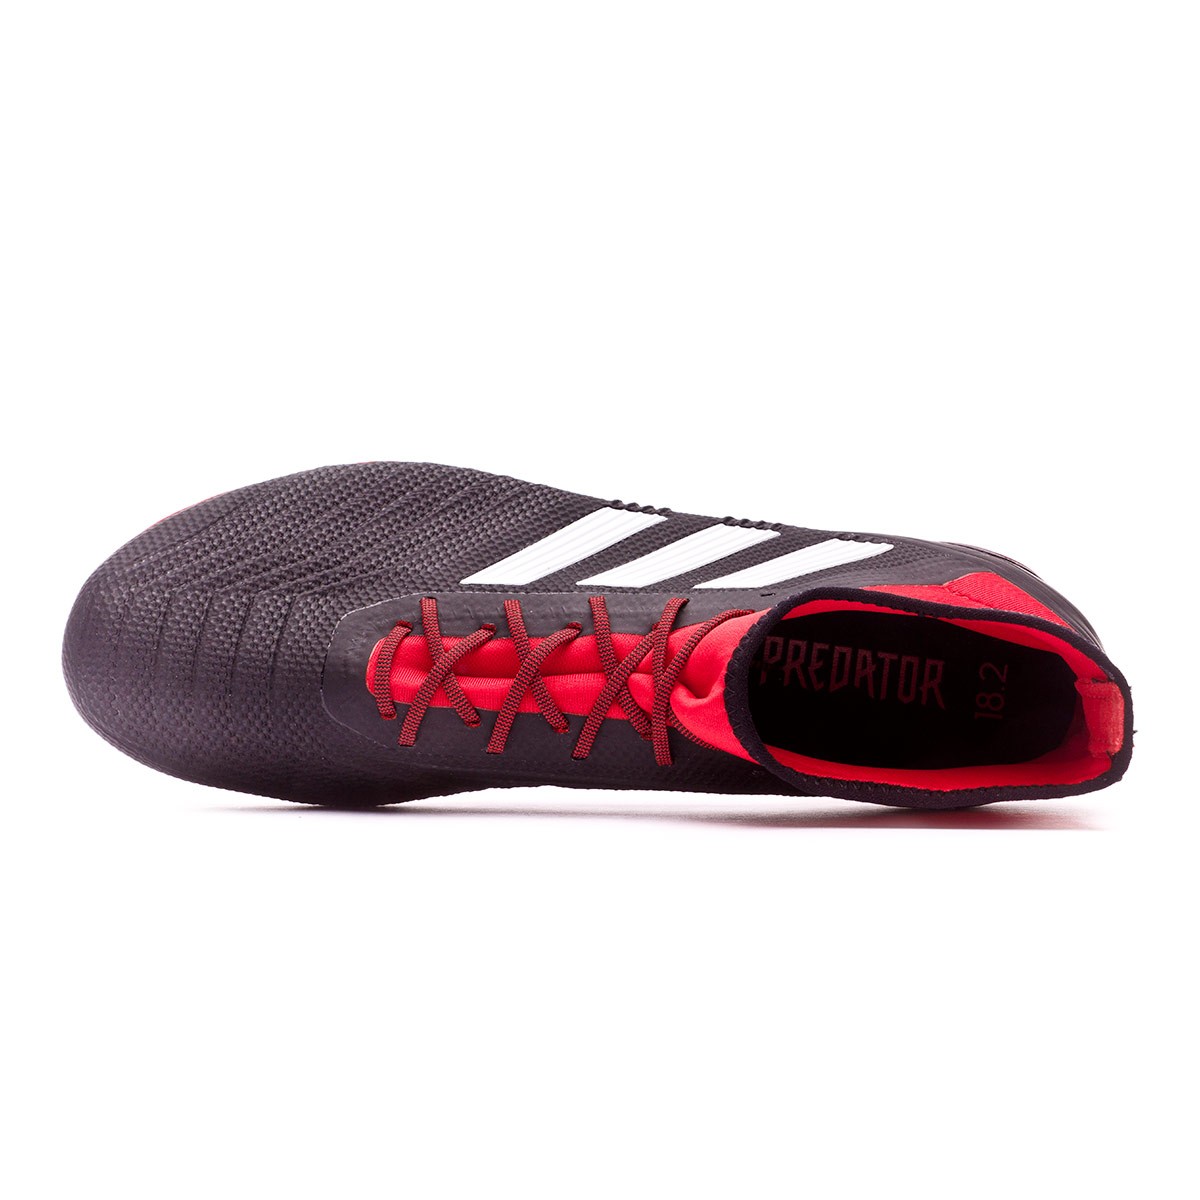 Football Boots Adidas Predator 18 2 Fg Core Black White Red